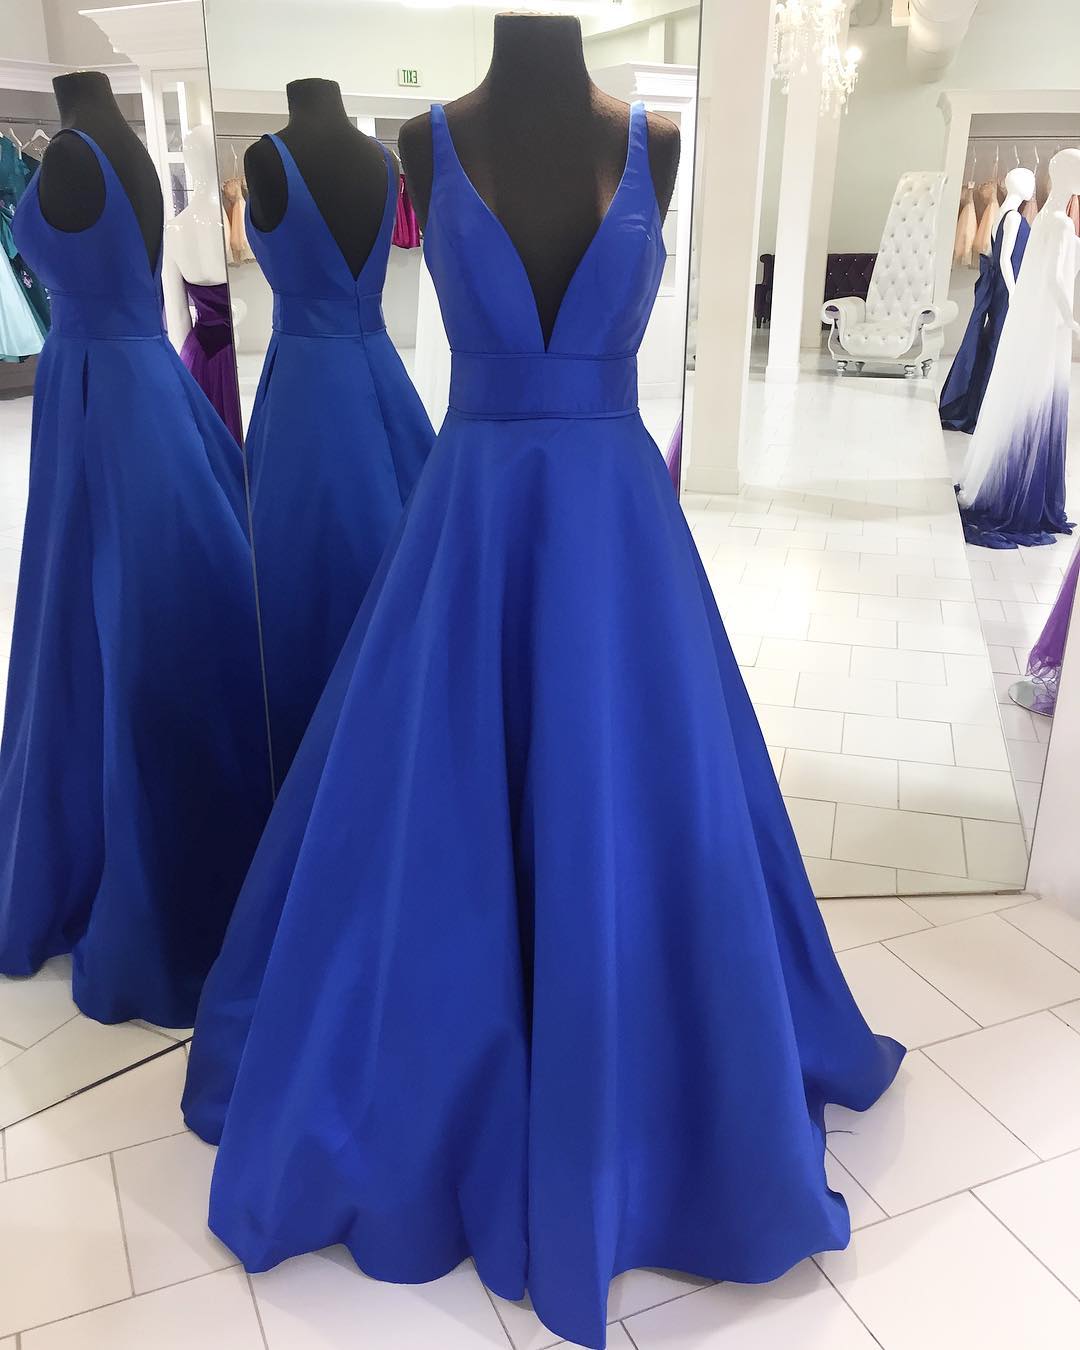 Simply V Neck Royal Blue Long Prom Dress,pd14941